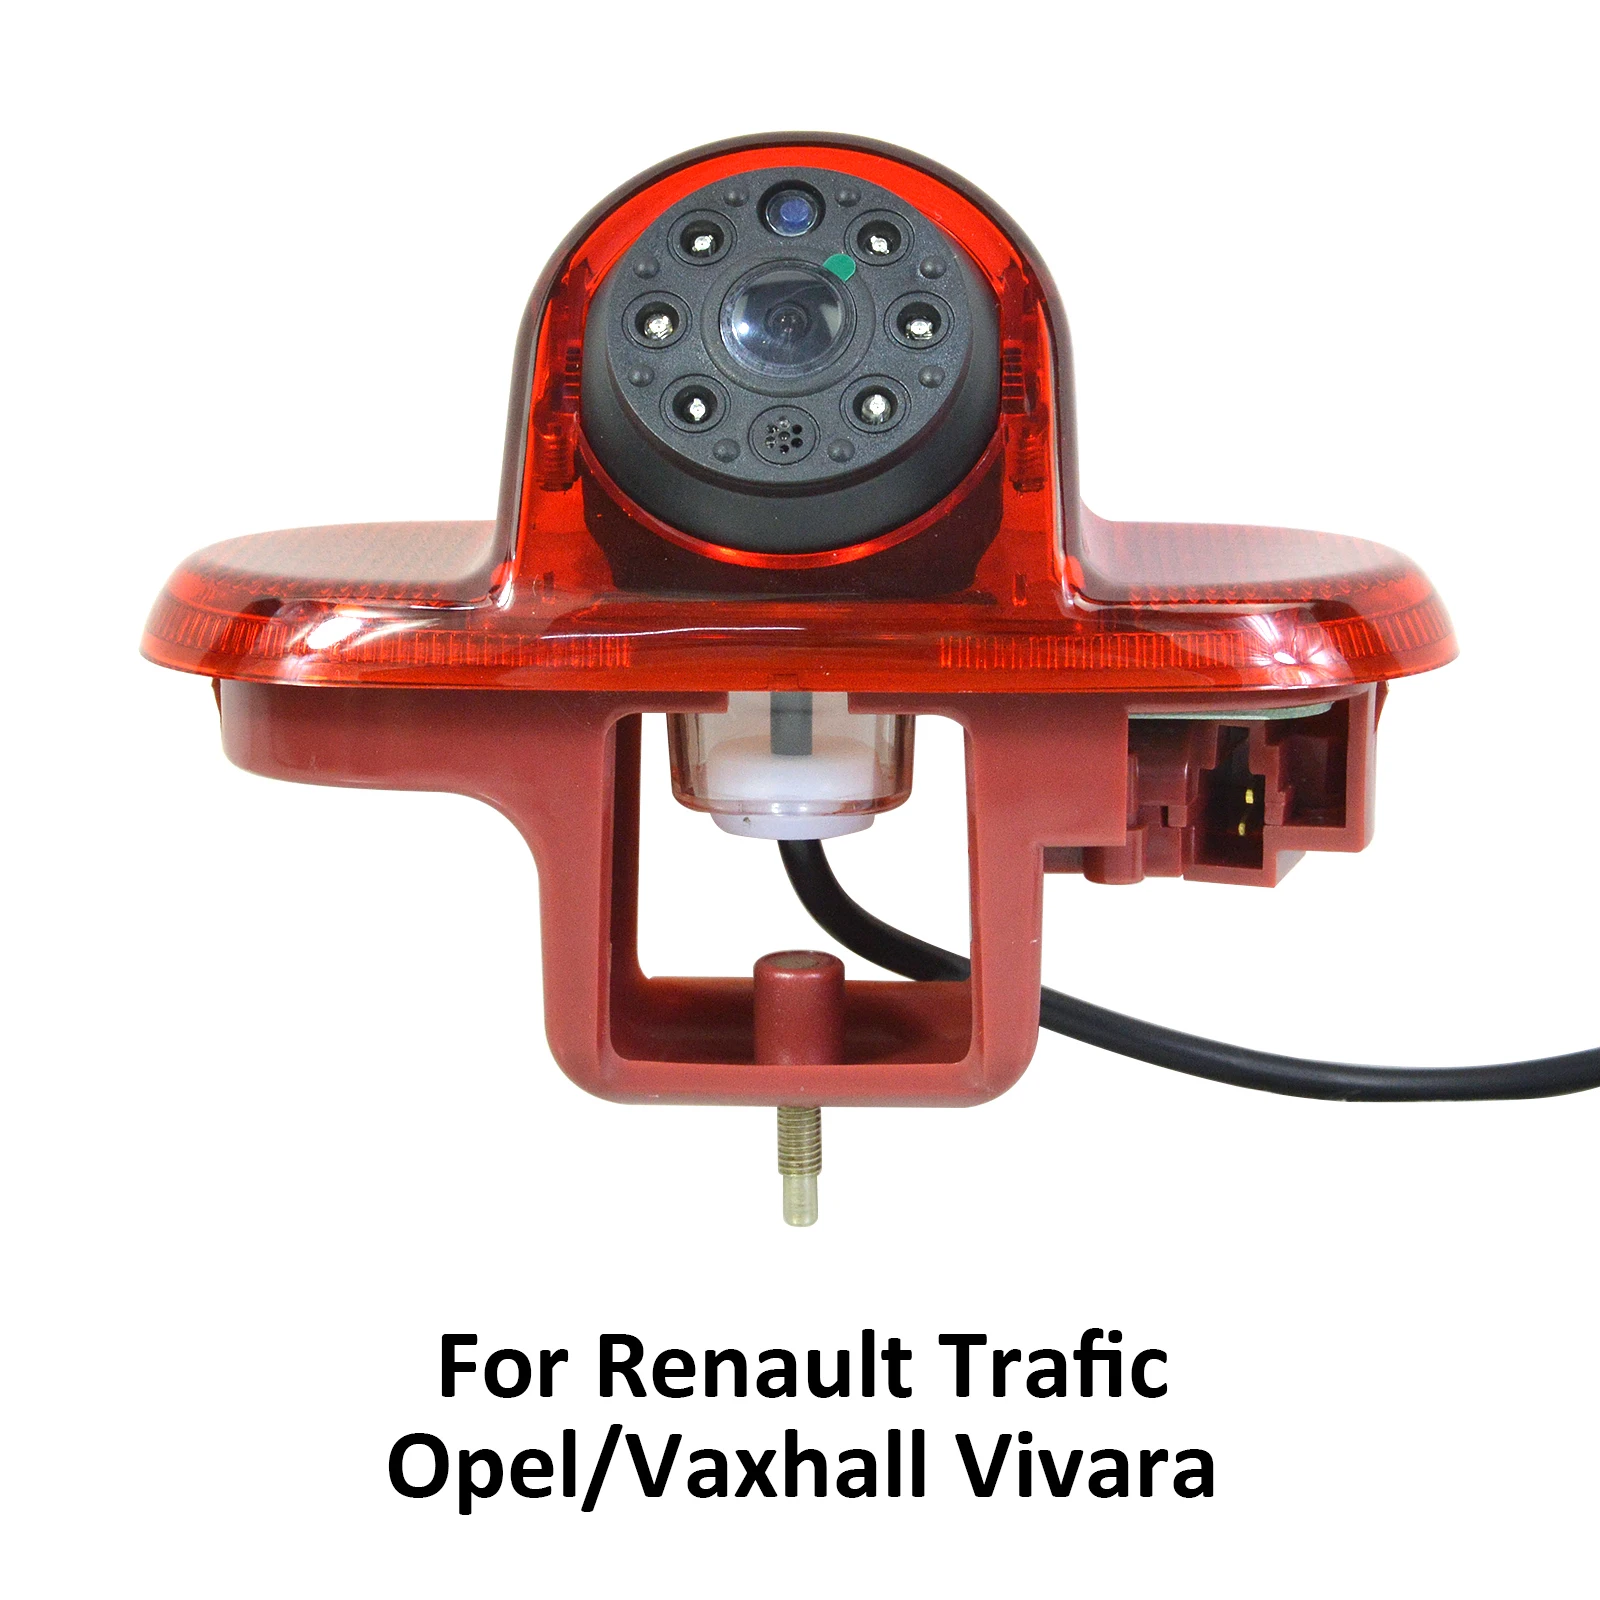 

IR Night Vision Rear View Backup Brake Light High Definition Waterproof Camera for Renault Trafic 2001-2014 Opel/Vaxhall Vivara